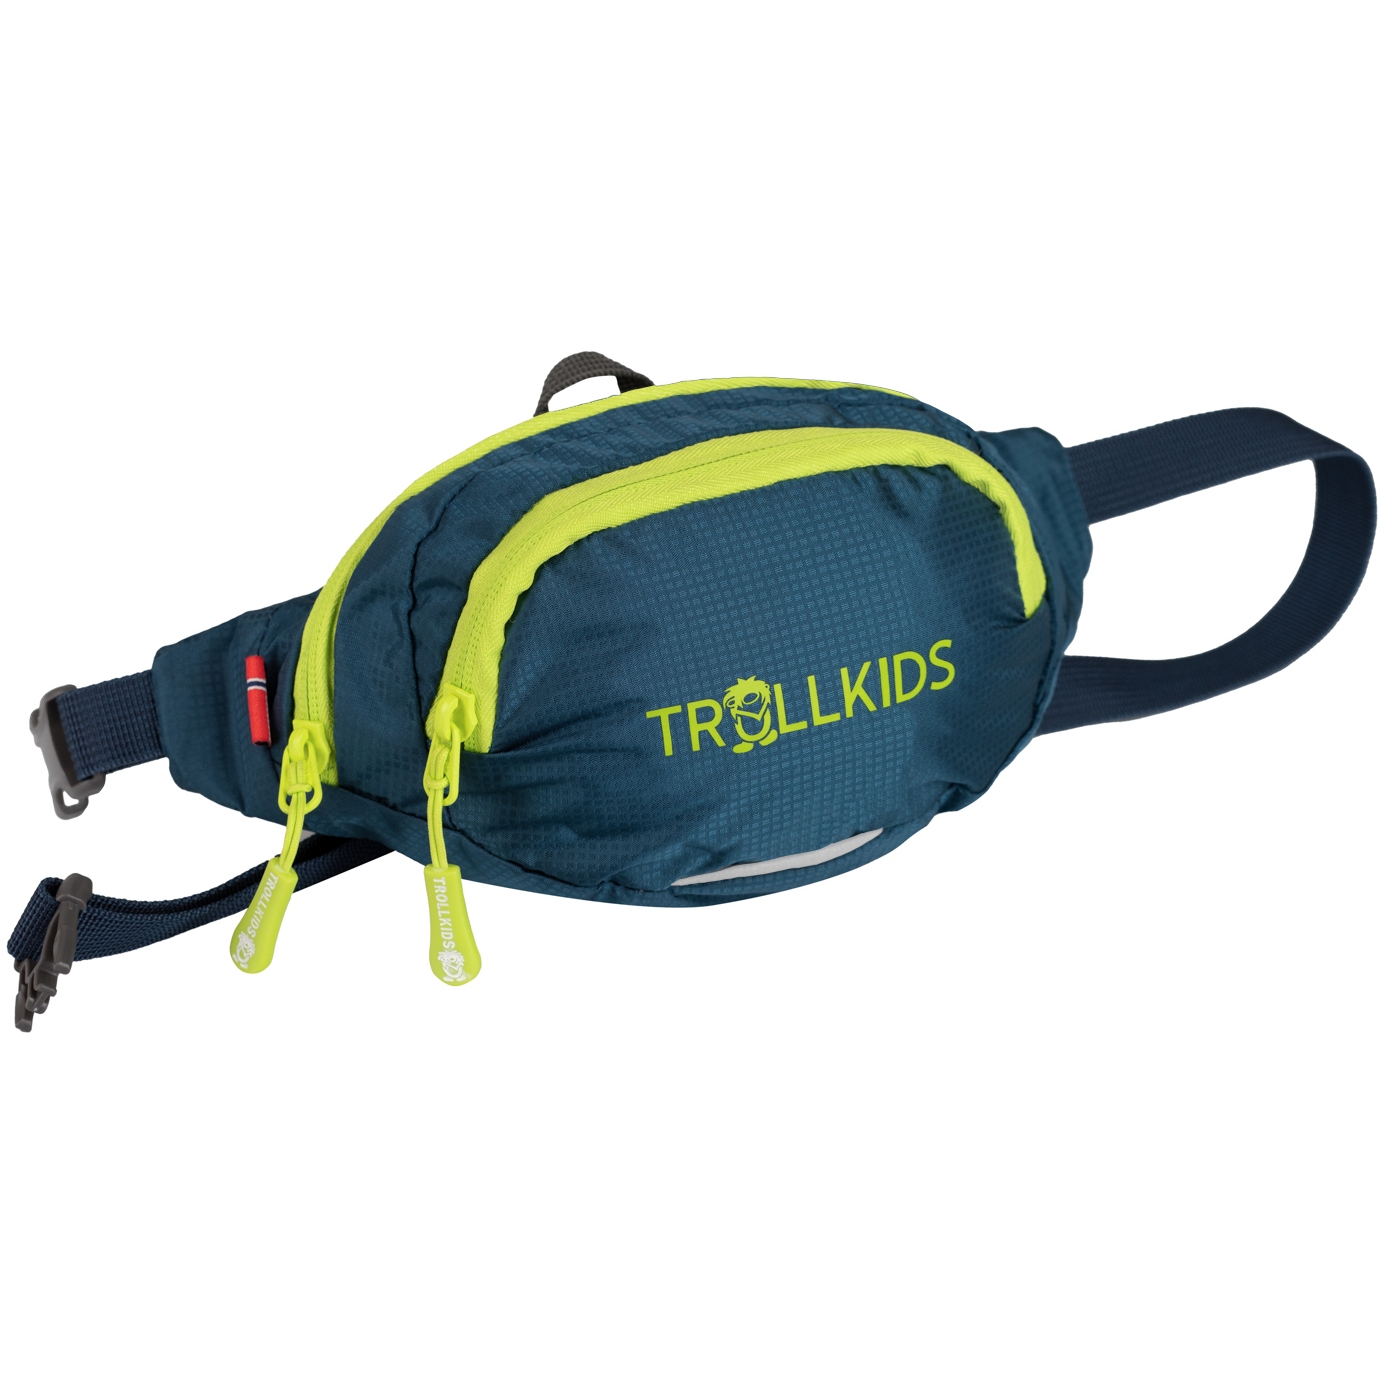 Productfoto van Trollkids Trolltunga Hip Bag 1.2L Kids - Petrol/Lime